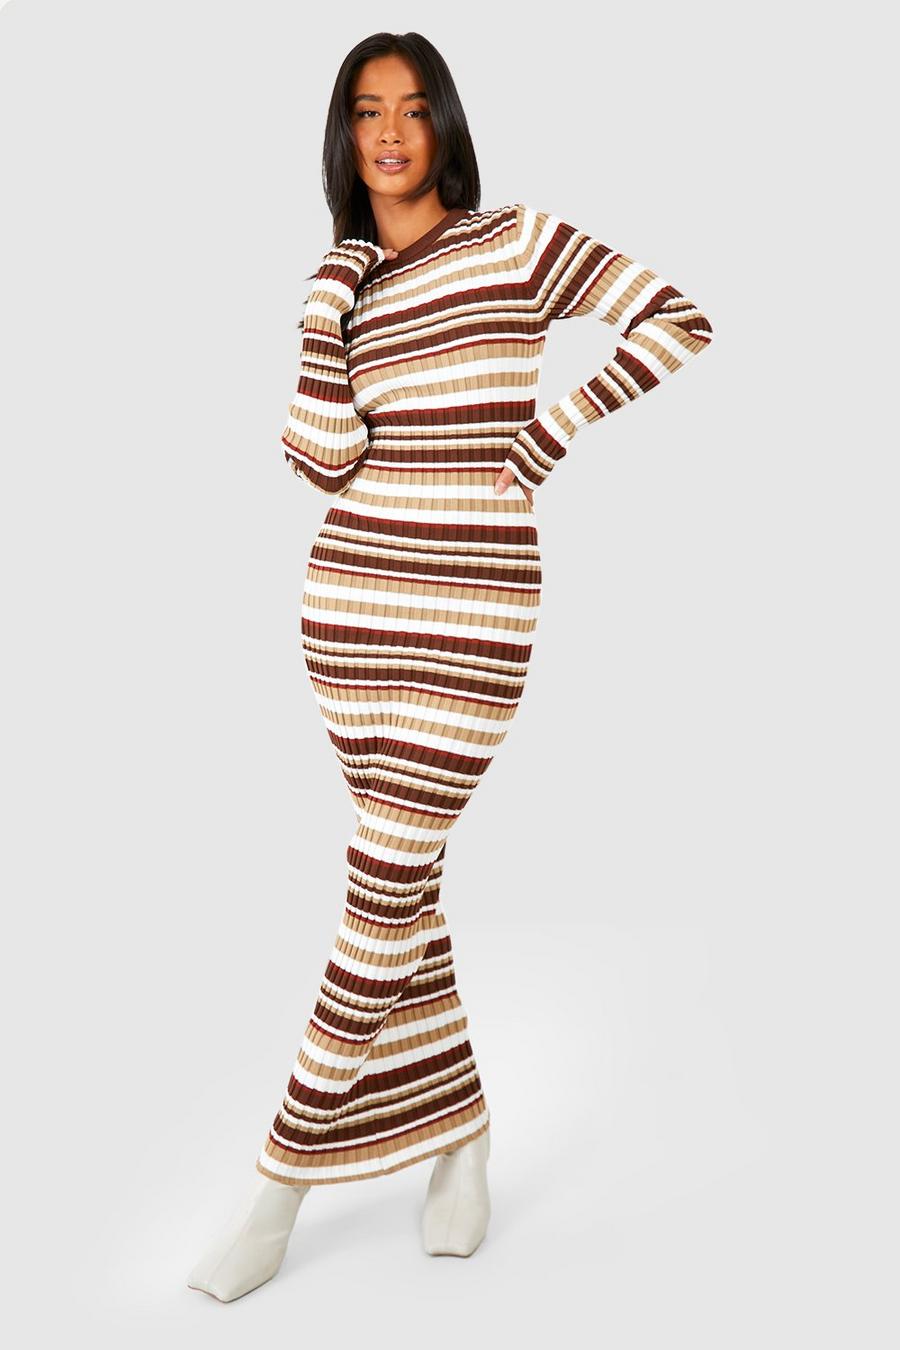 Chocolate brun Petite Mixed Stripe Midaxi Knitted Dress